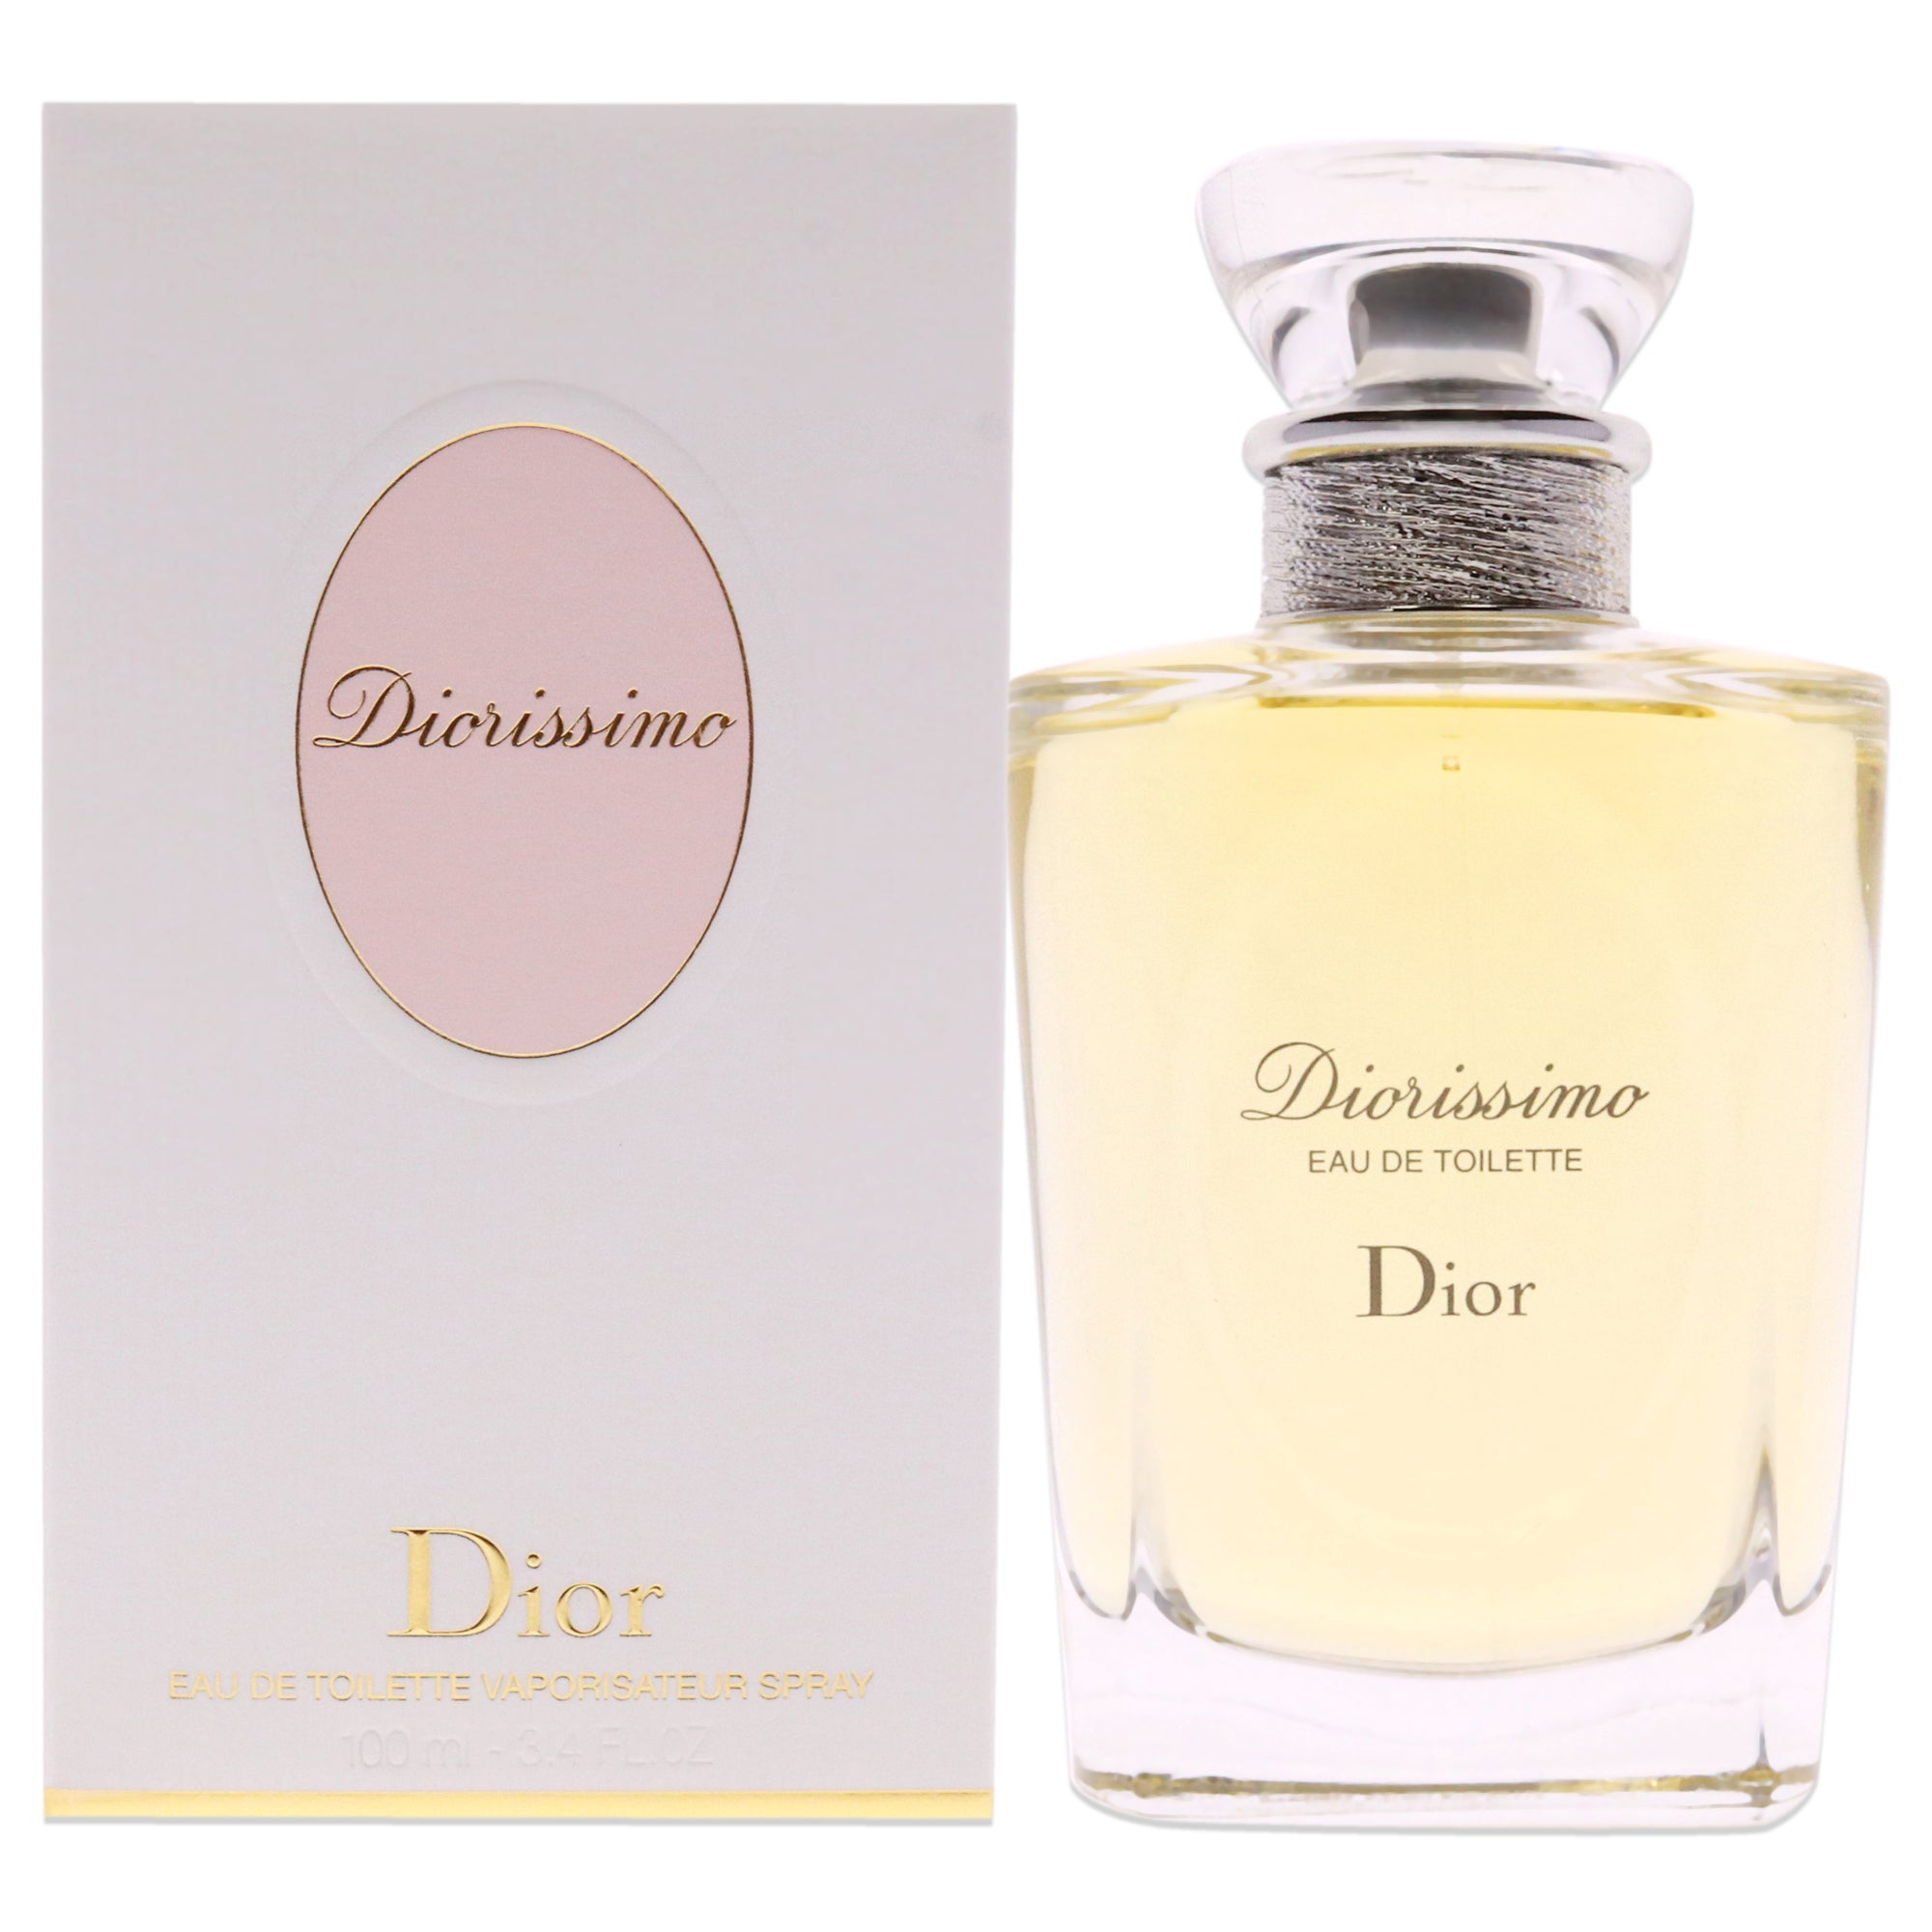 Christian Dior Diorissimo Women's Eau De Toilette Spray - 3.4 fl oz bottle